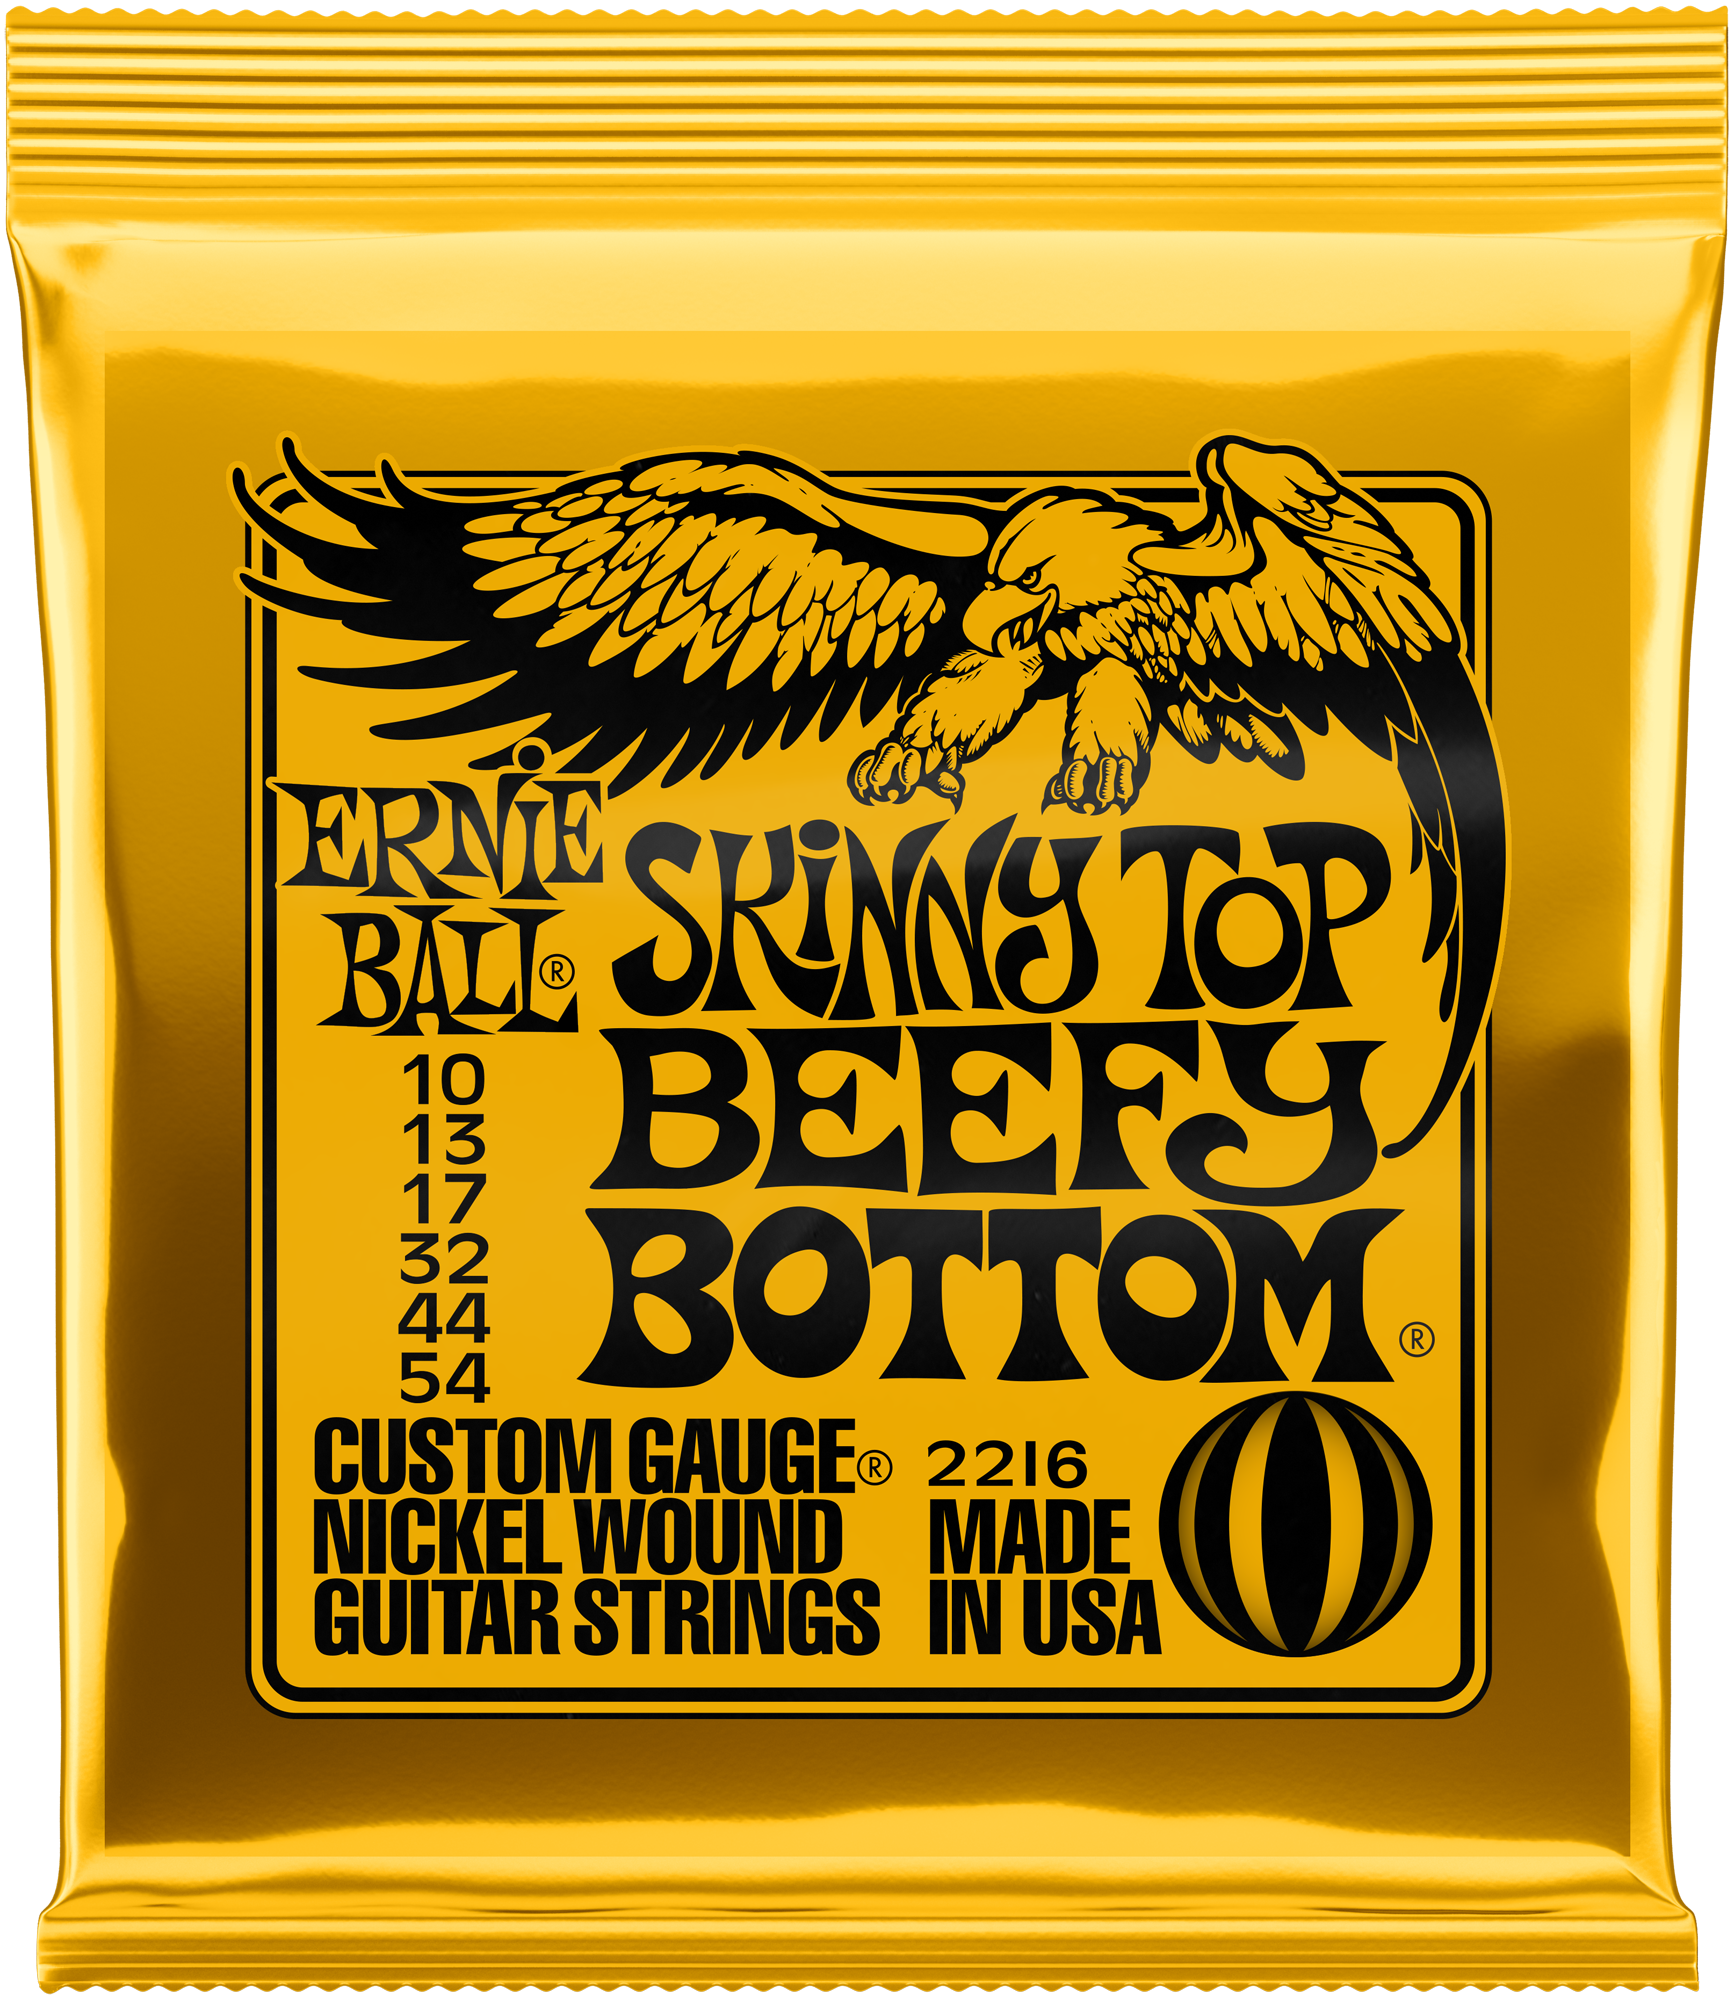 EB-2216 Skinny Top Beefy Bottom